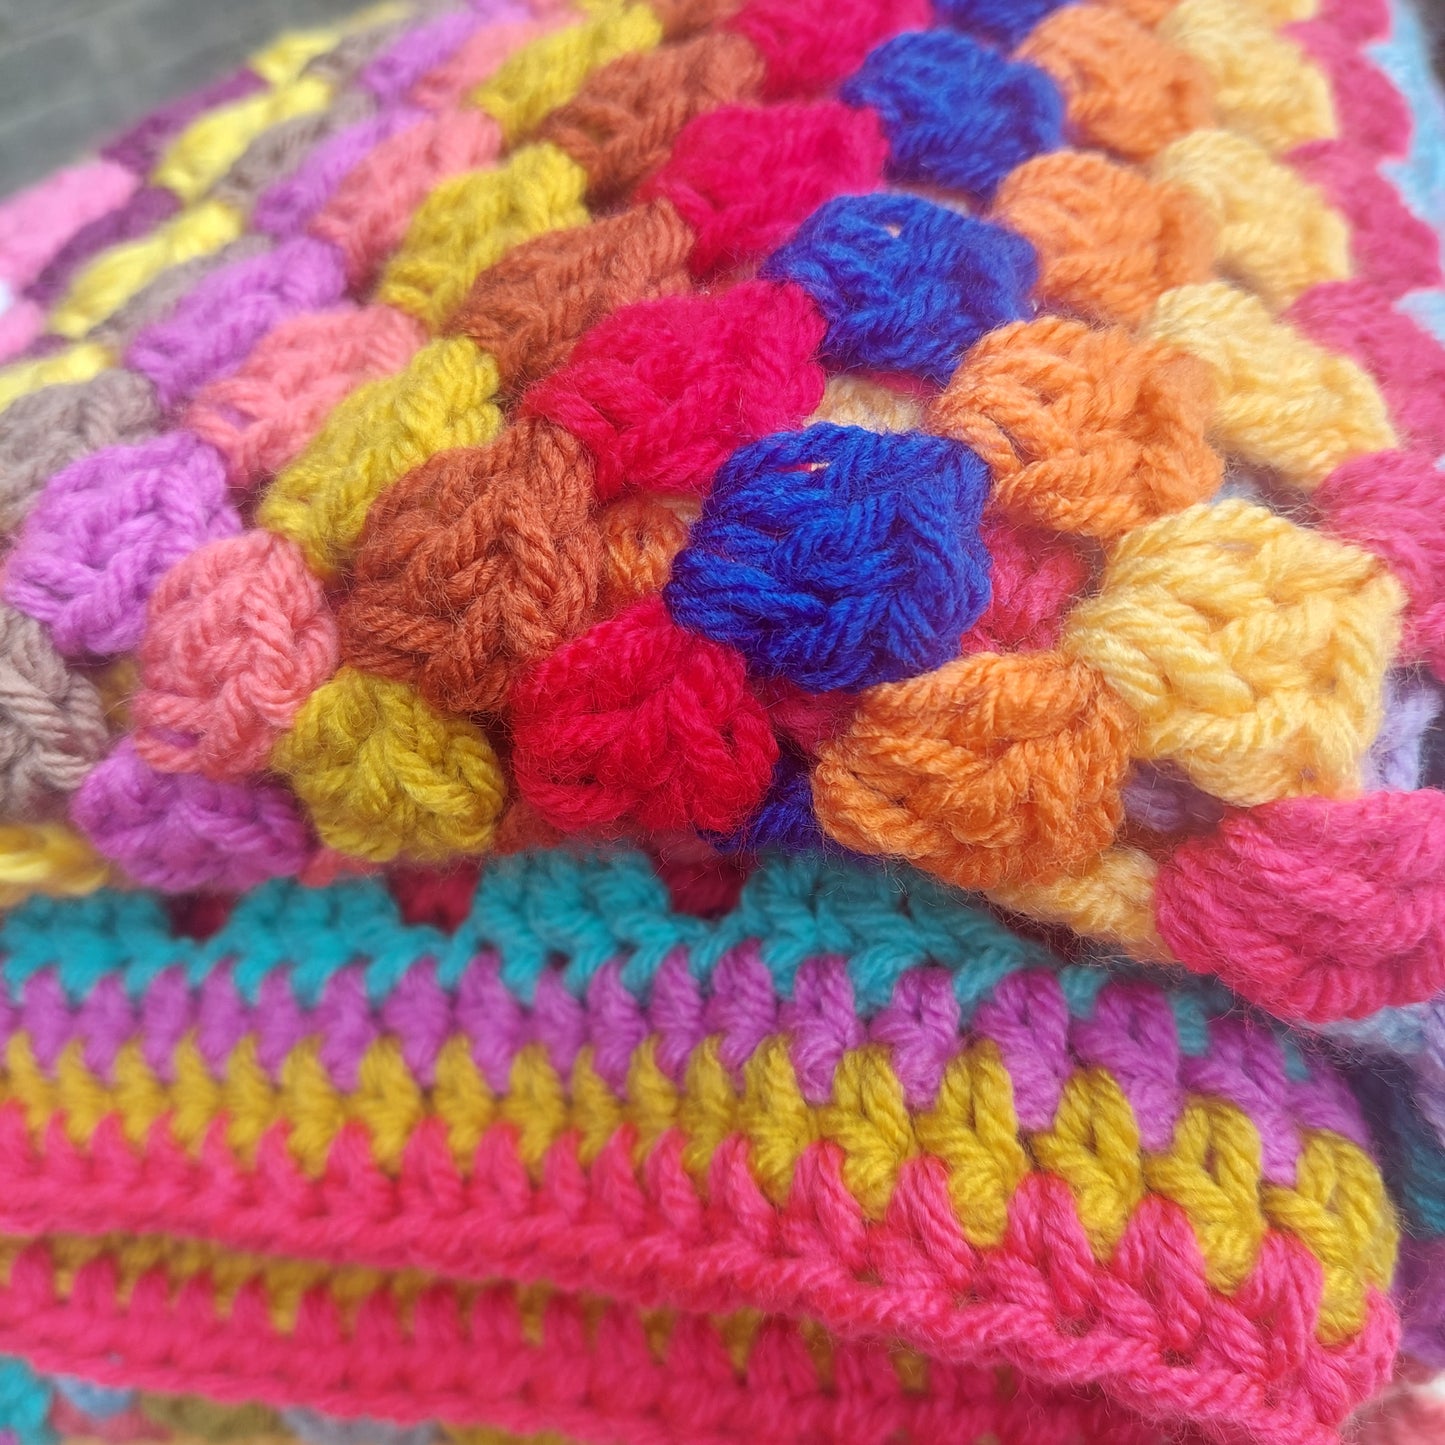 Large Random Crochet Granny Square Blanket - No 3